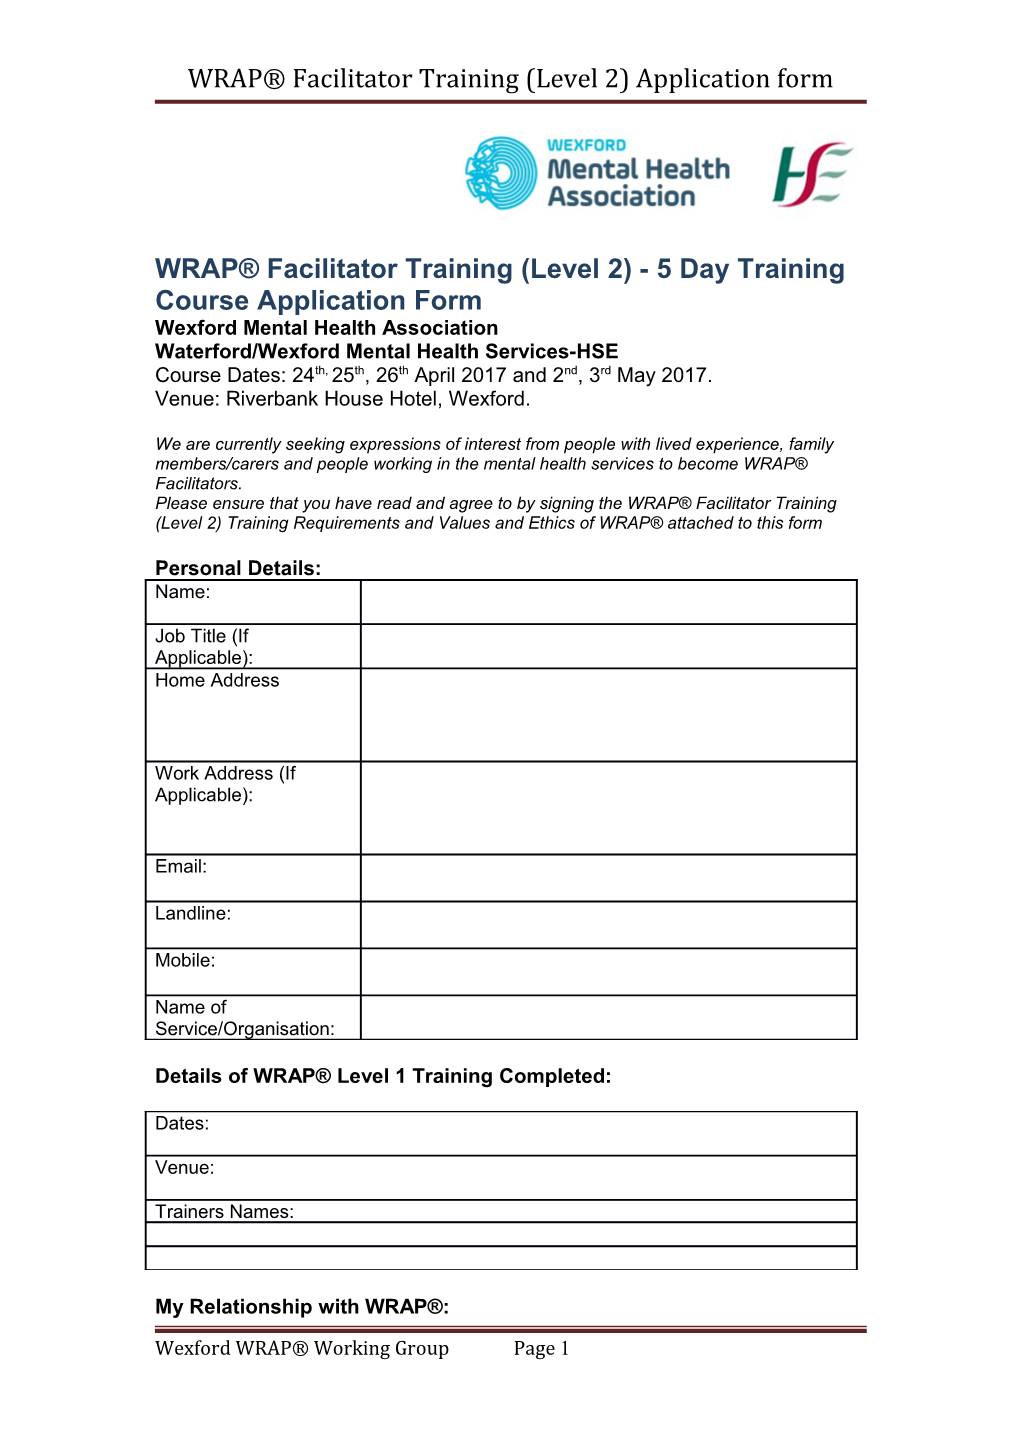 WRAP Facilitator Training (Level 2) Application Form